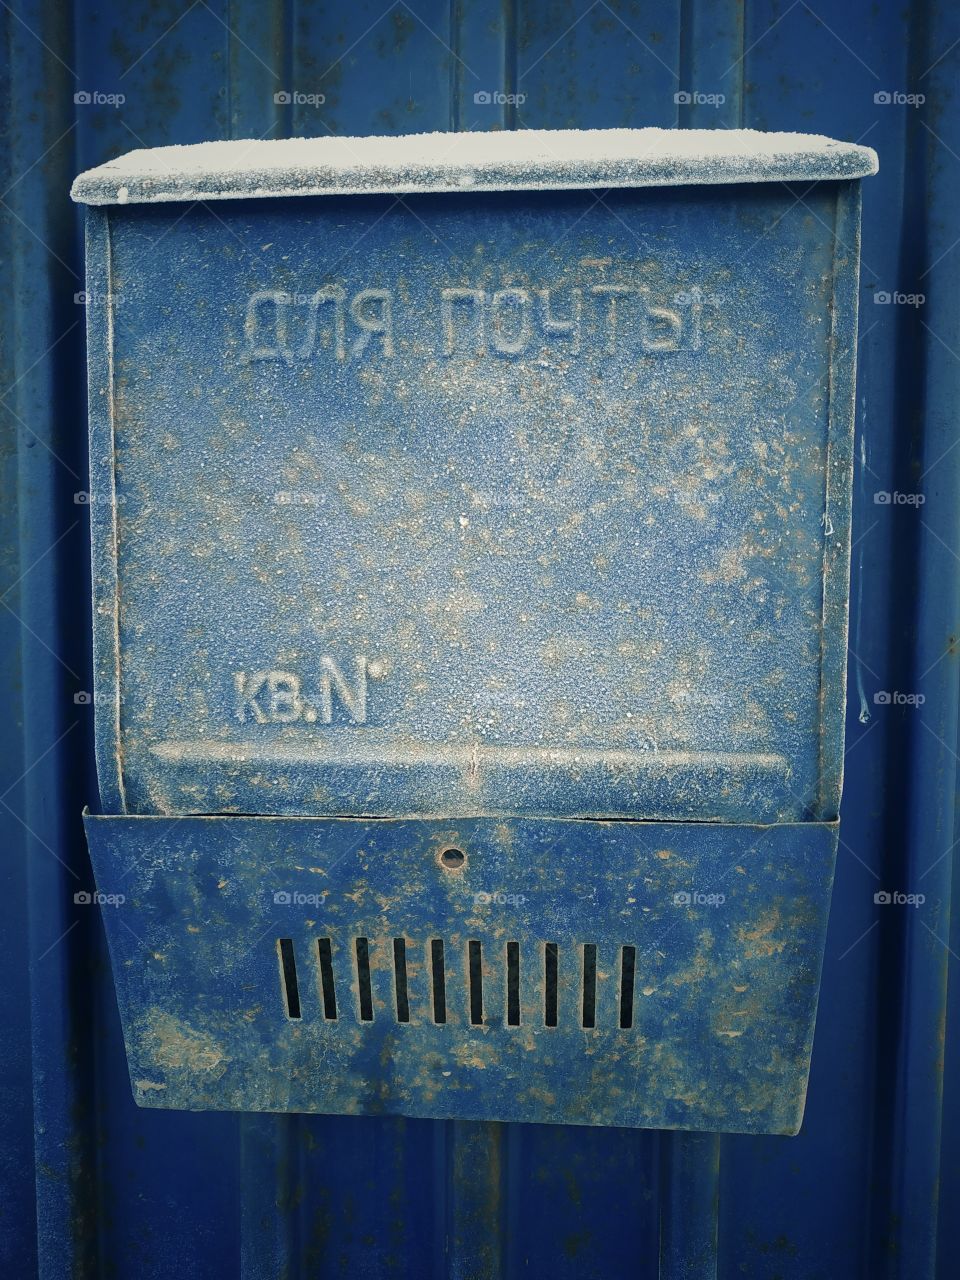 Blue Mailbox